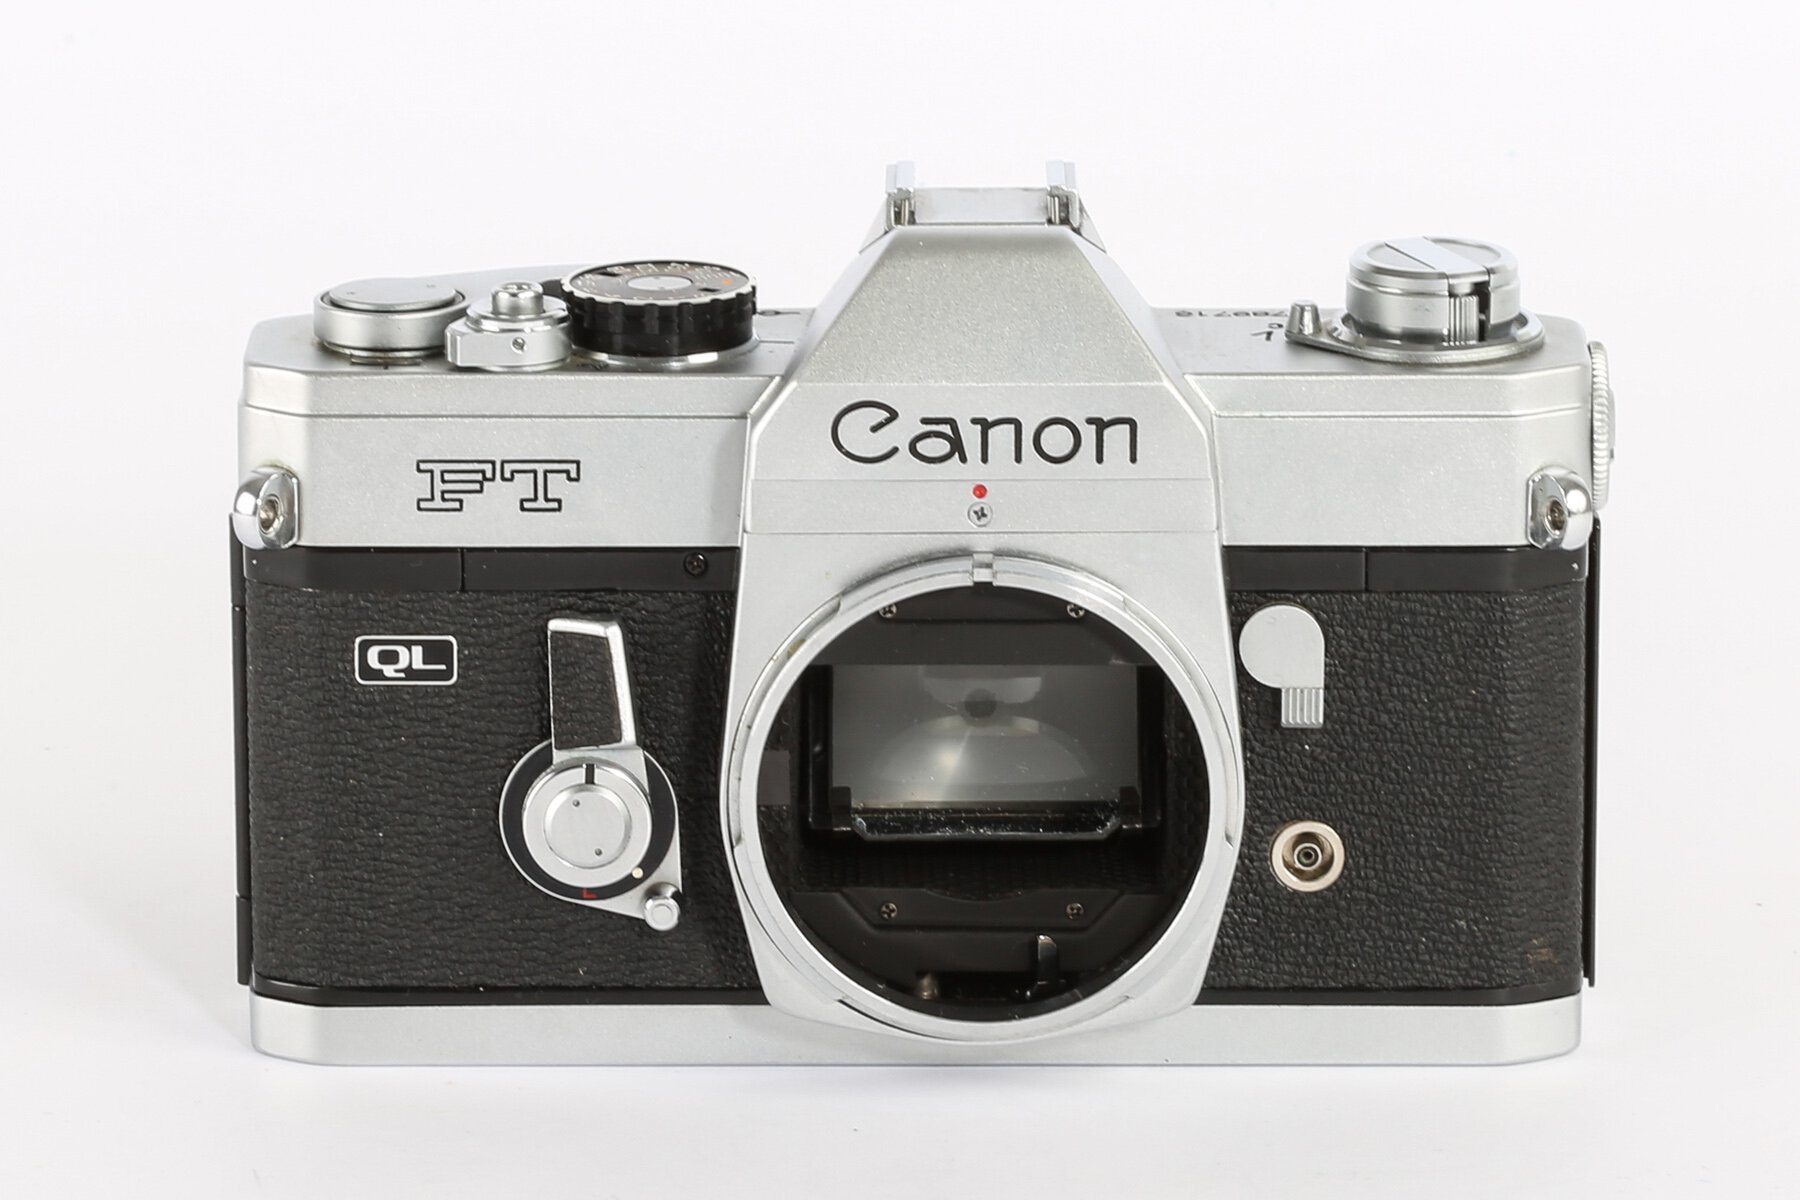 Canon FT QL Analoge Kamera